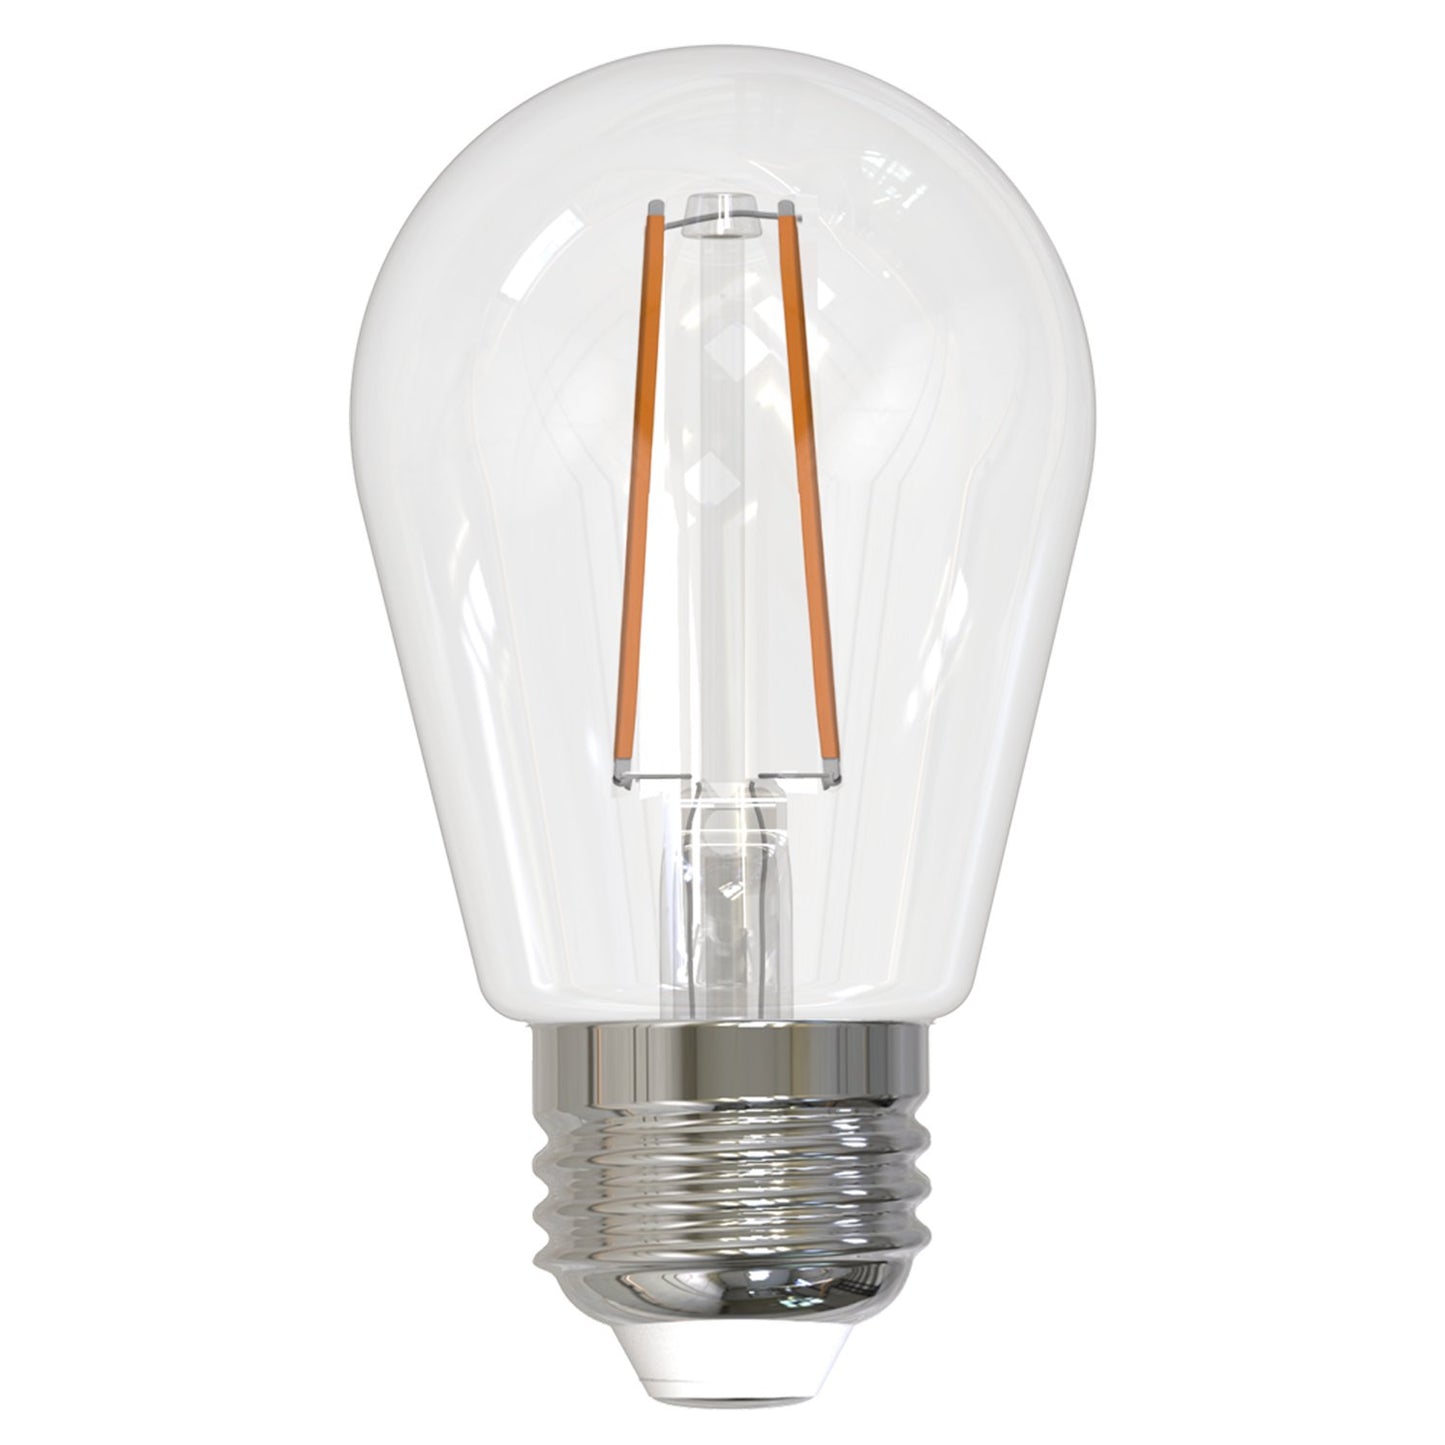 Bulbrite LED Filament S14 Dimmable Medium Screw Base (E26) Light Bulb 11 Watt Equivalent 2700K, Clear